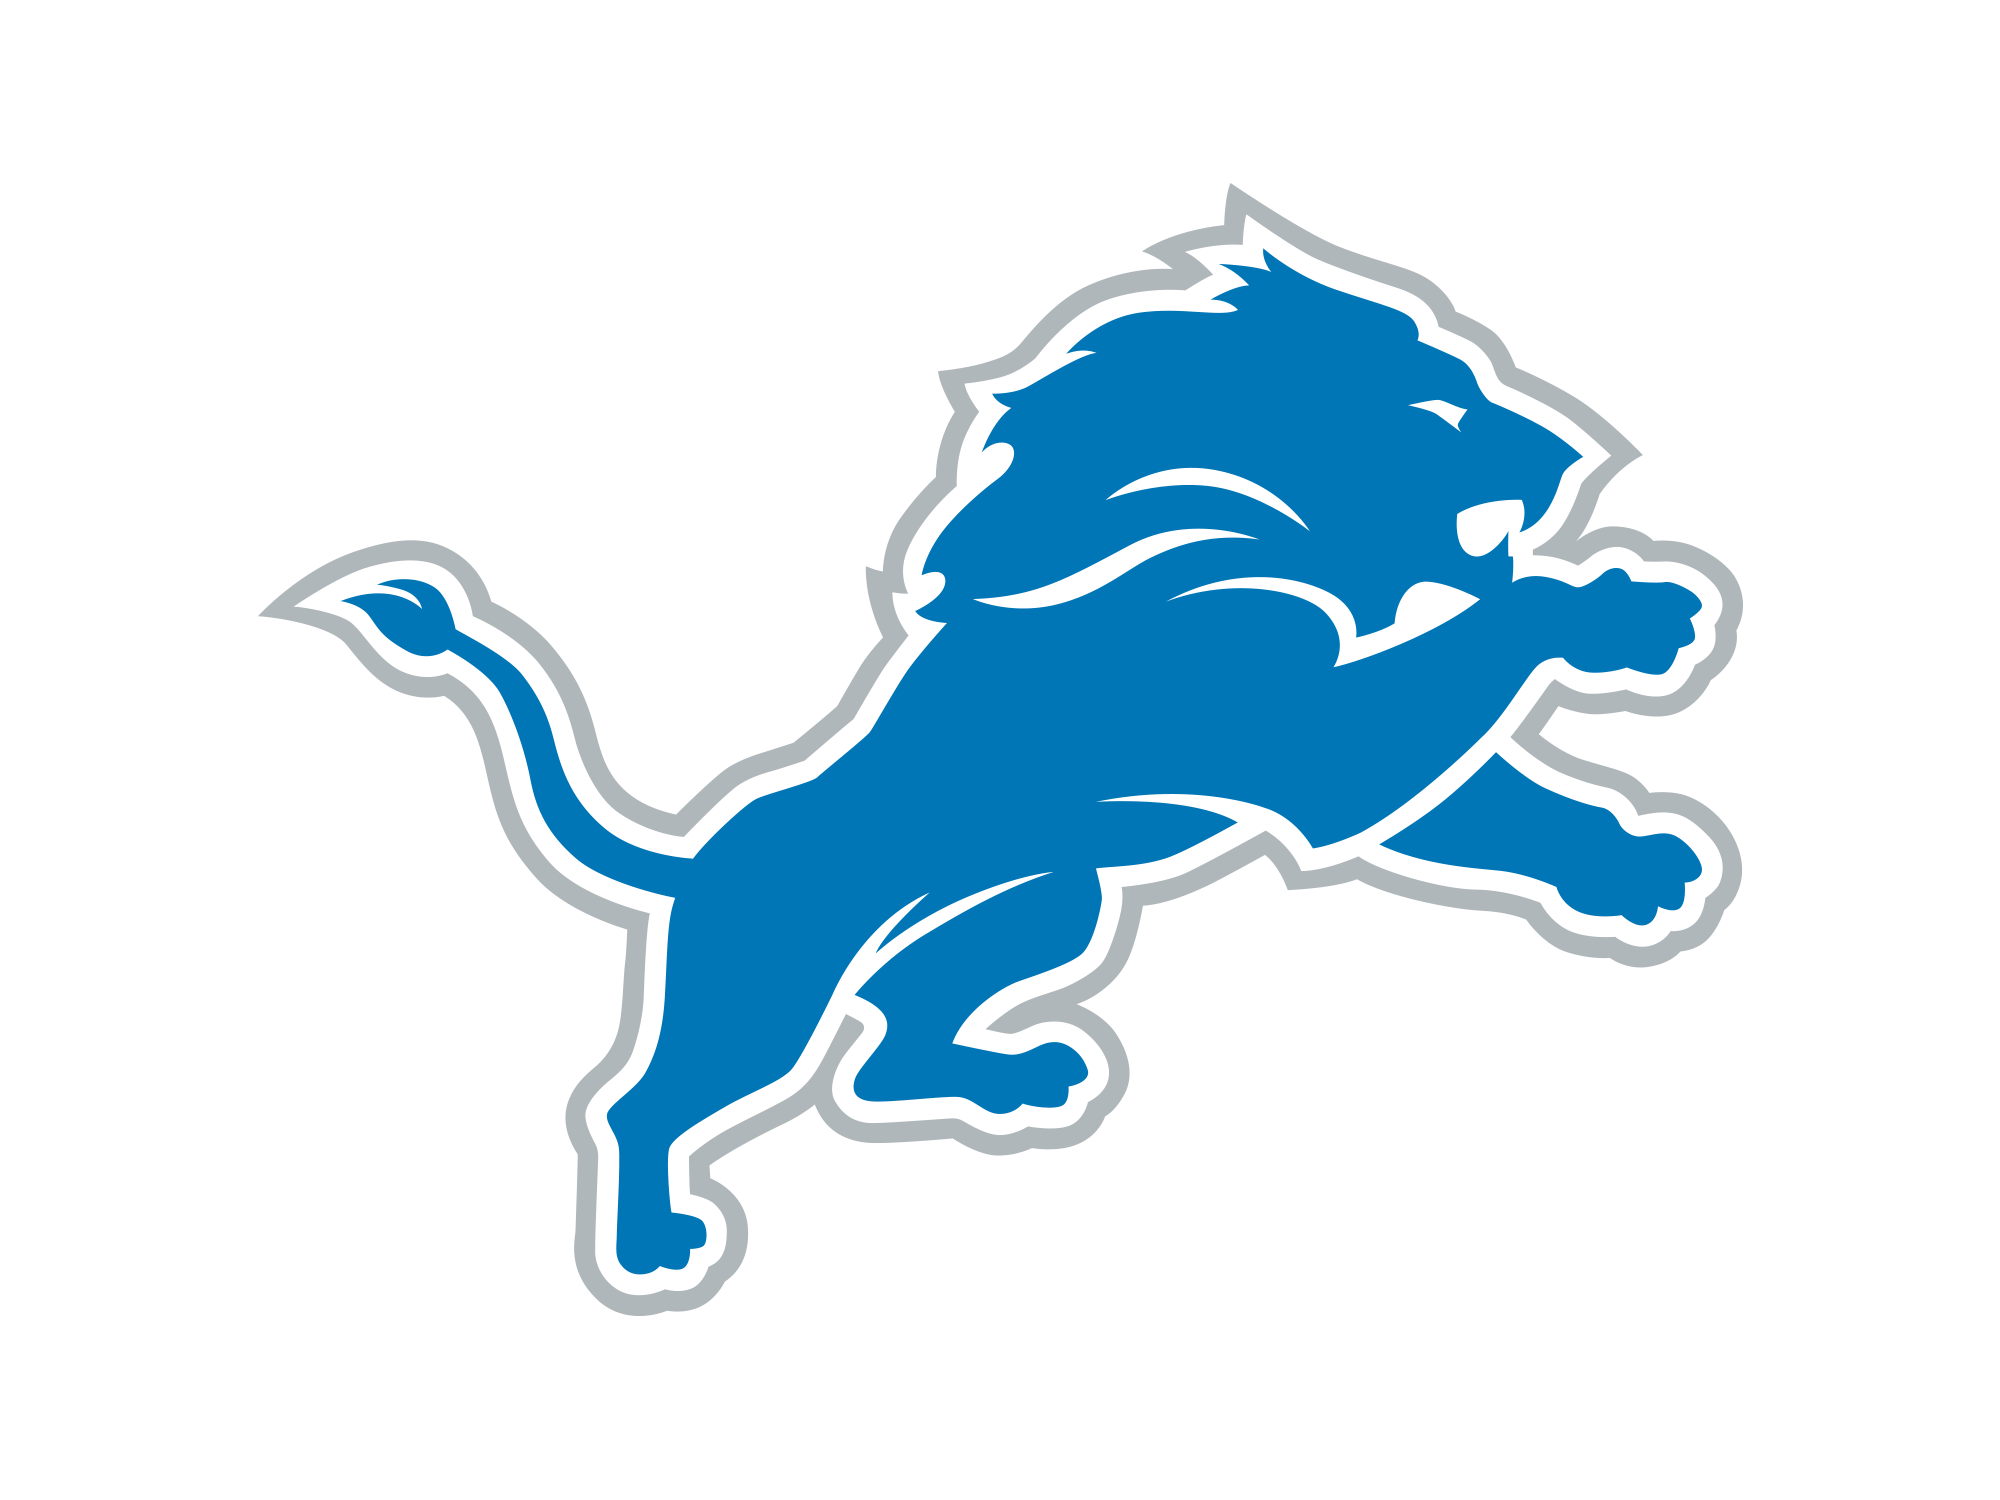 Detroit Lions 26 vs 17 Carolina Panthers summary, scores and